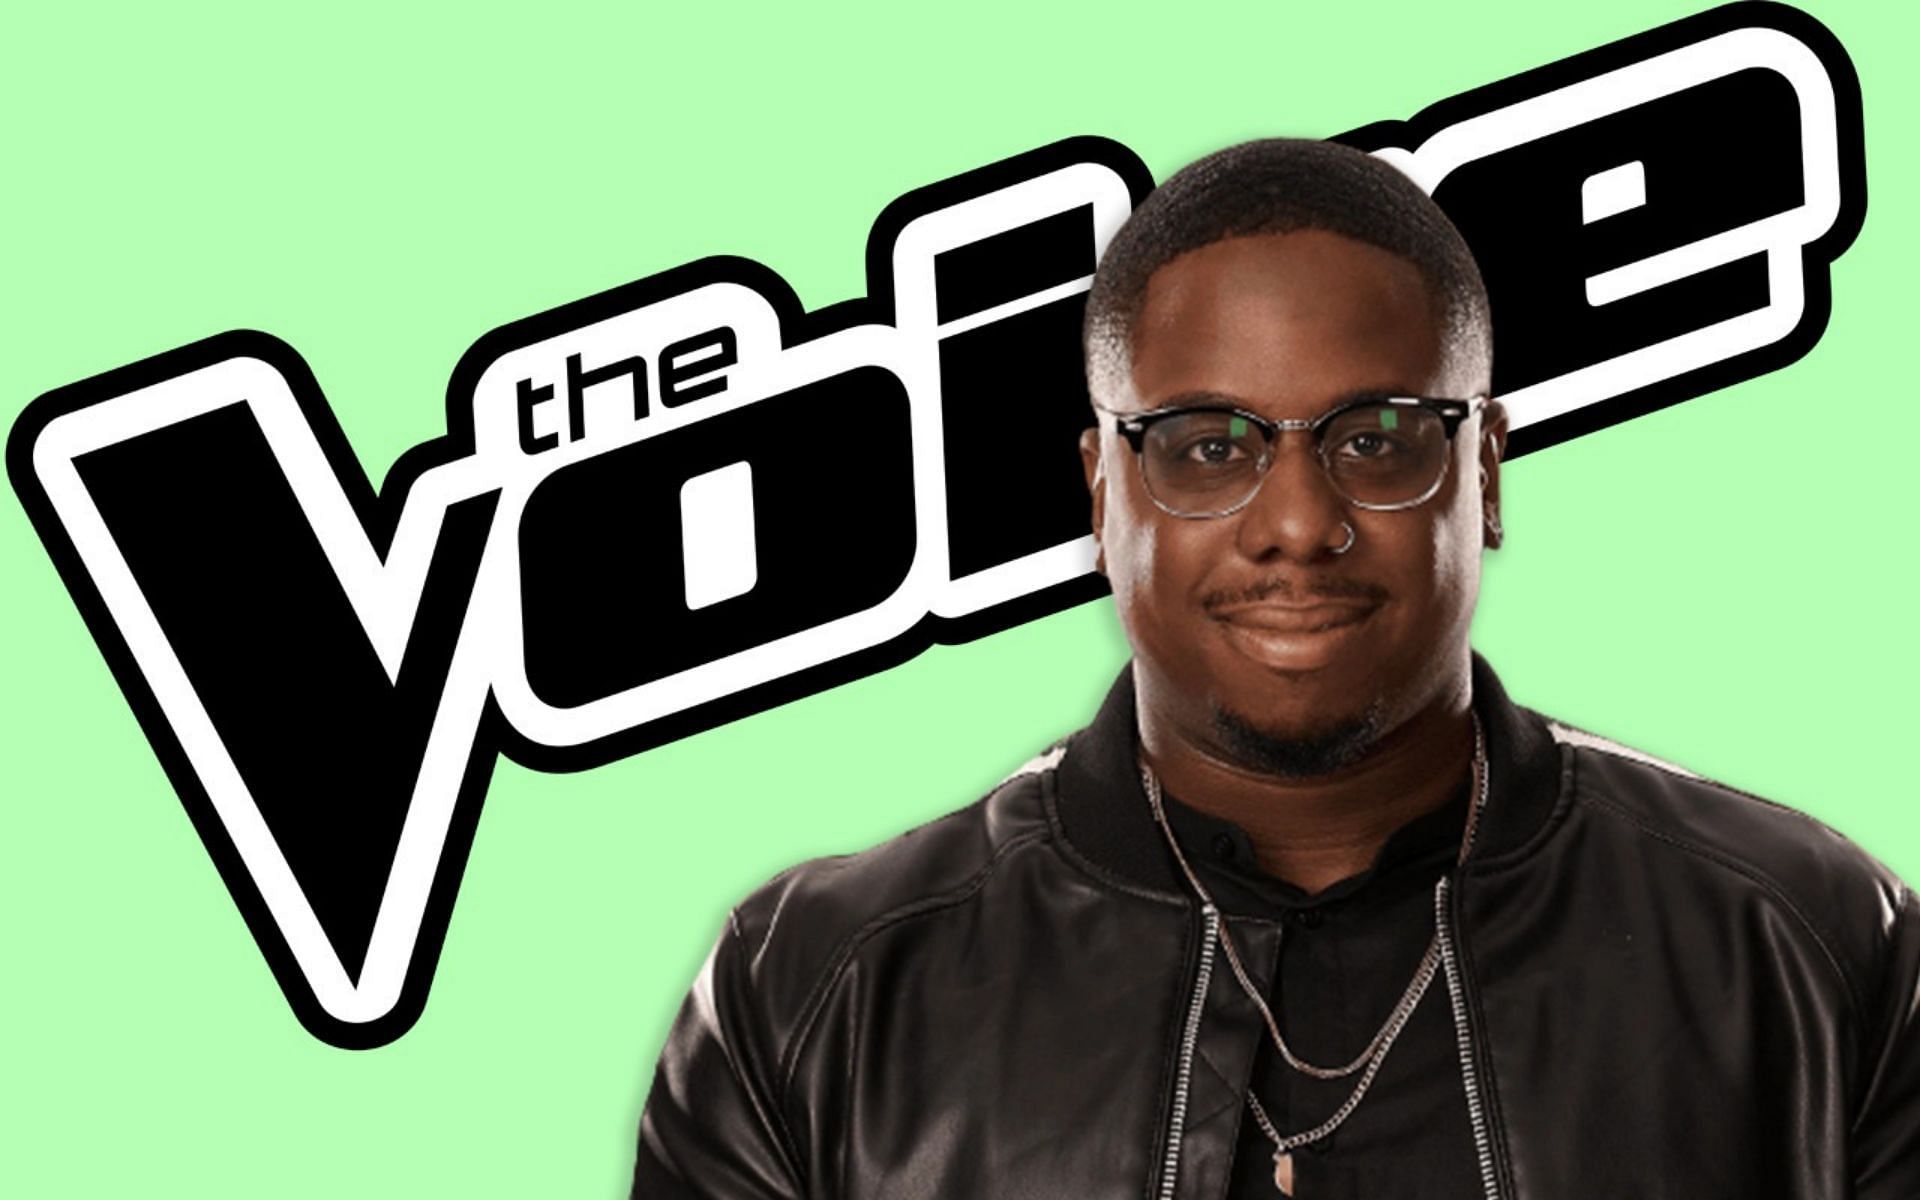 &#039;The Voice&#039; Season 21 contestant Aaron Hines (Image via Sportskeeda)